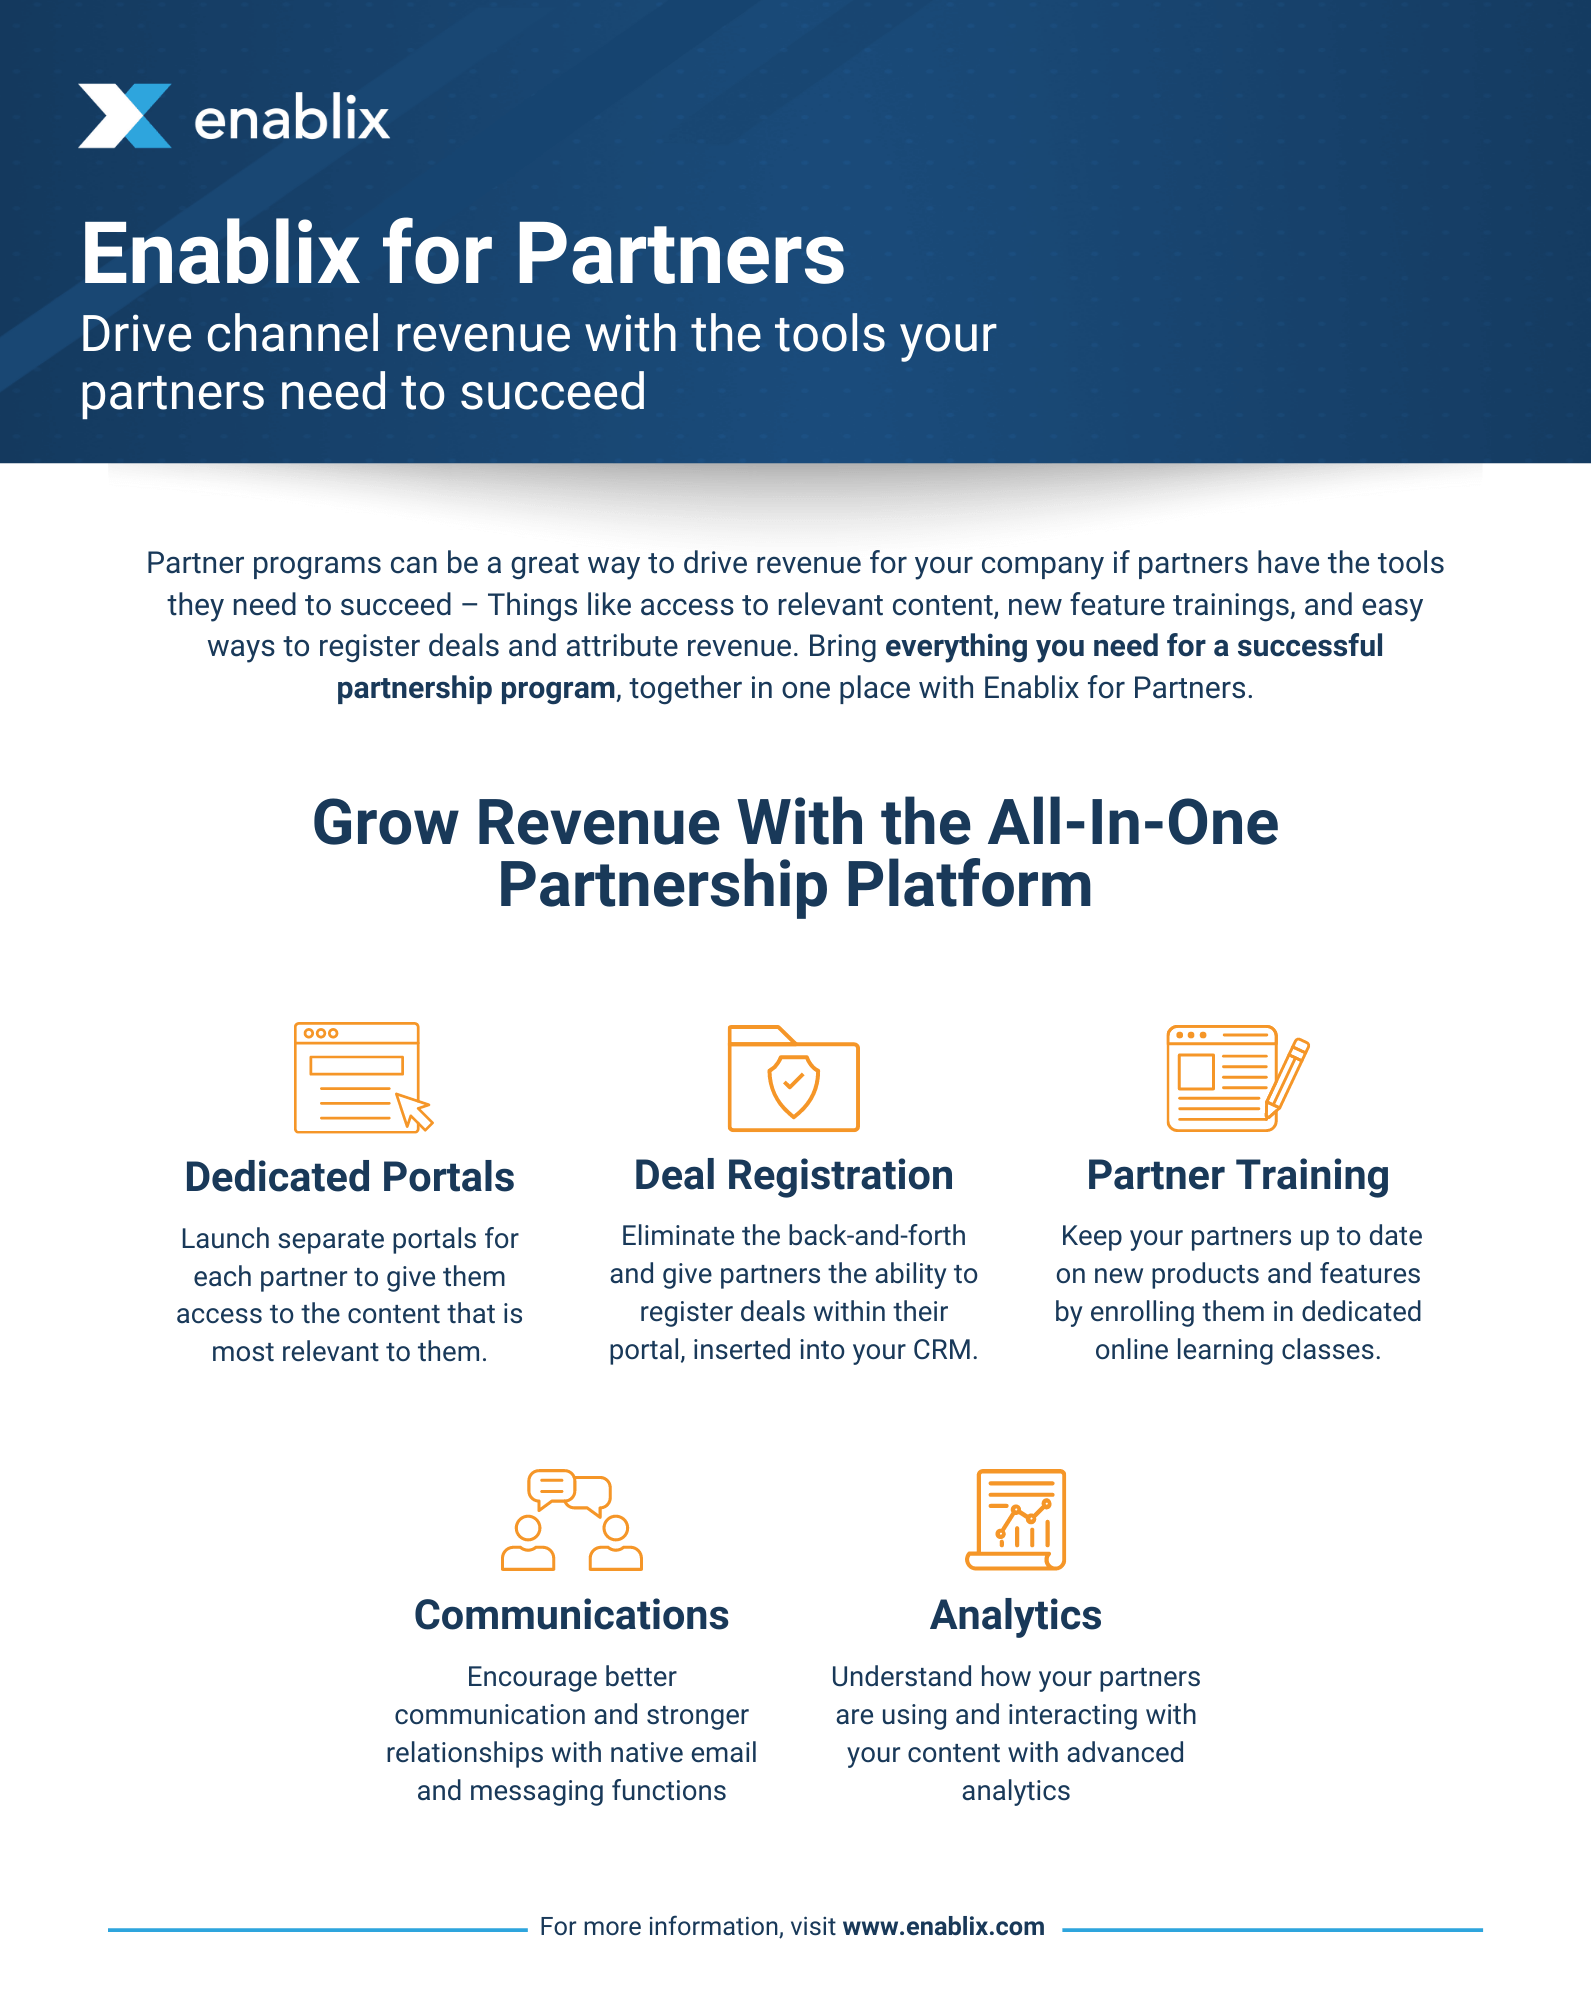 enablix for partners fact sheet